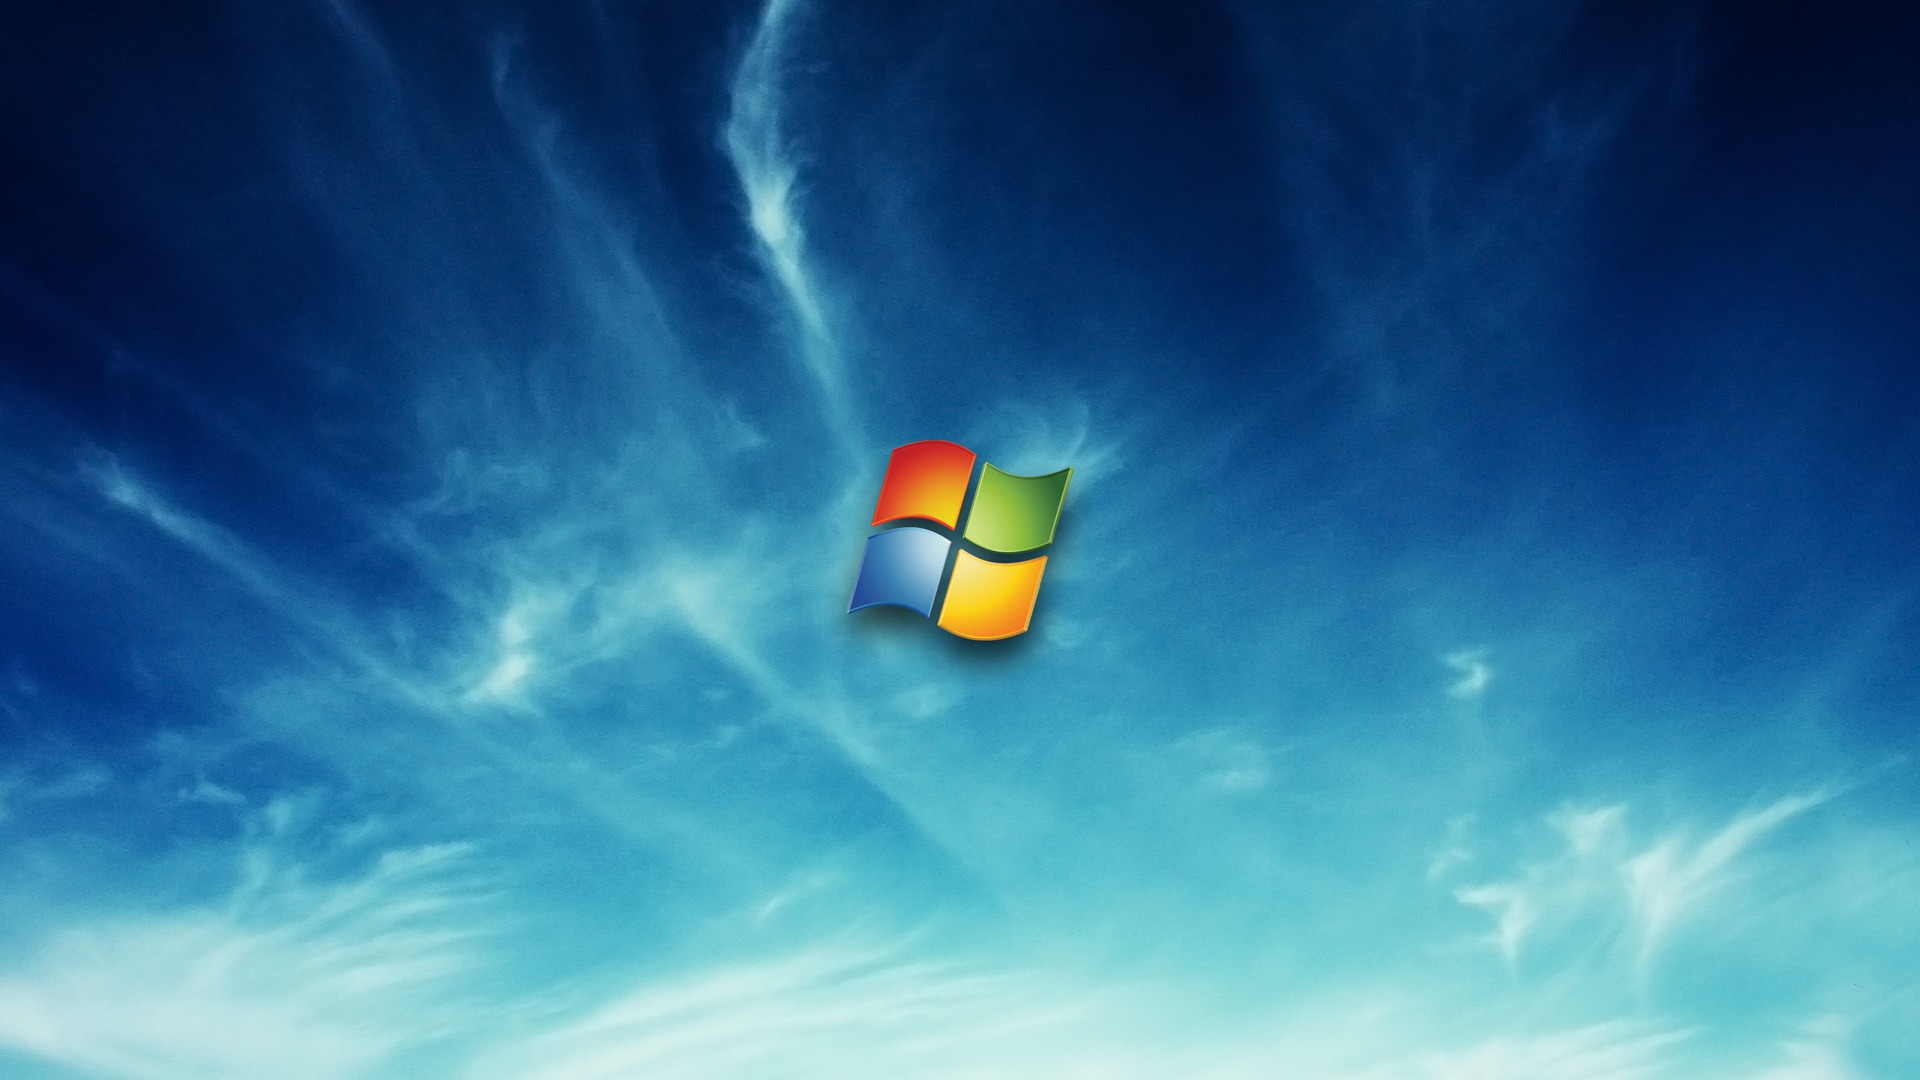 Windows 7 1080p Wallpapers HD